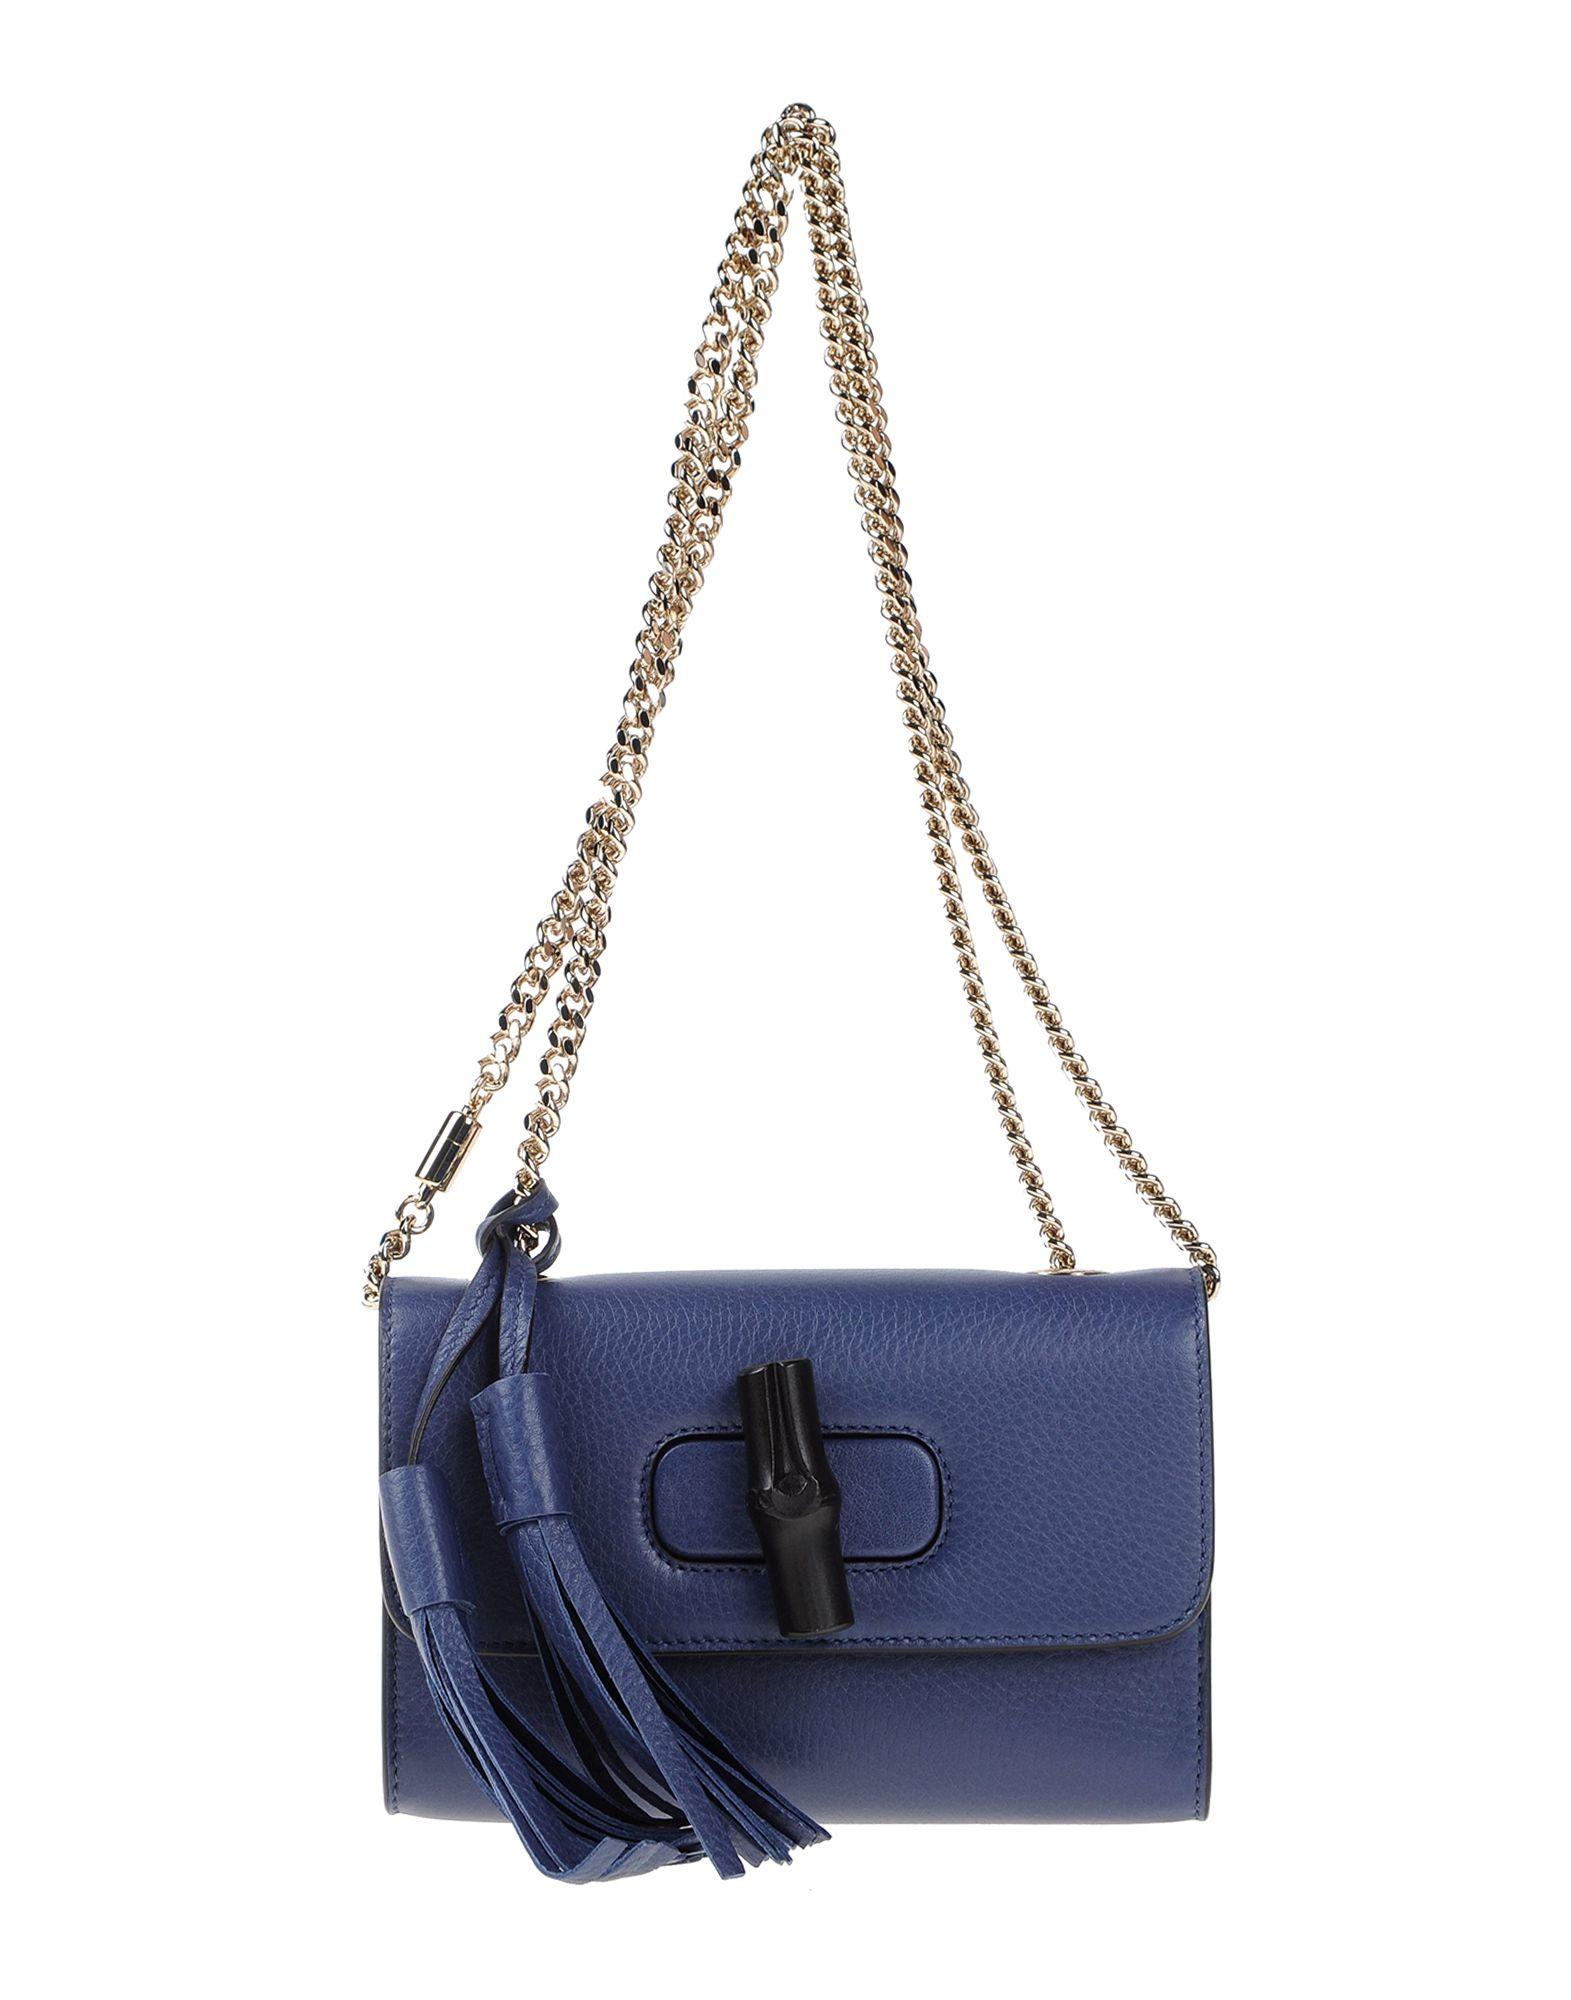 Lyst - Gucci Cross-body Bag in Blue